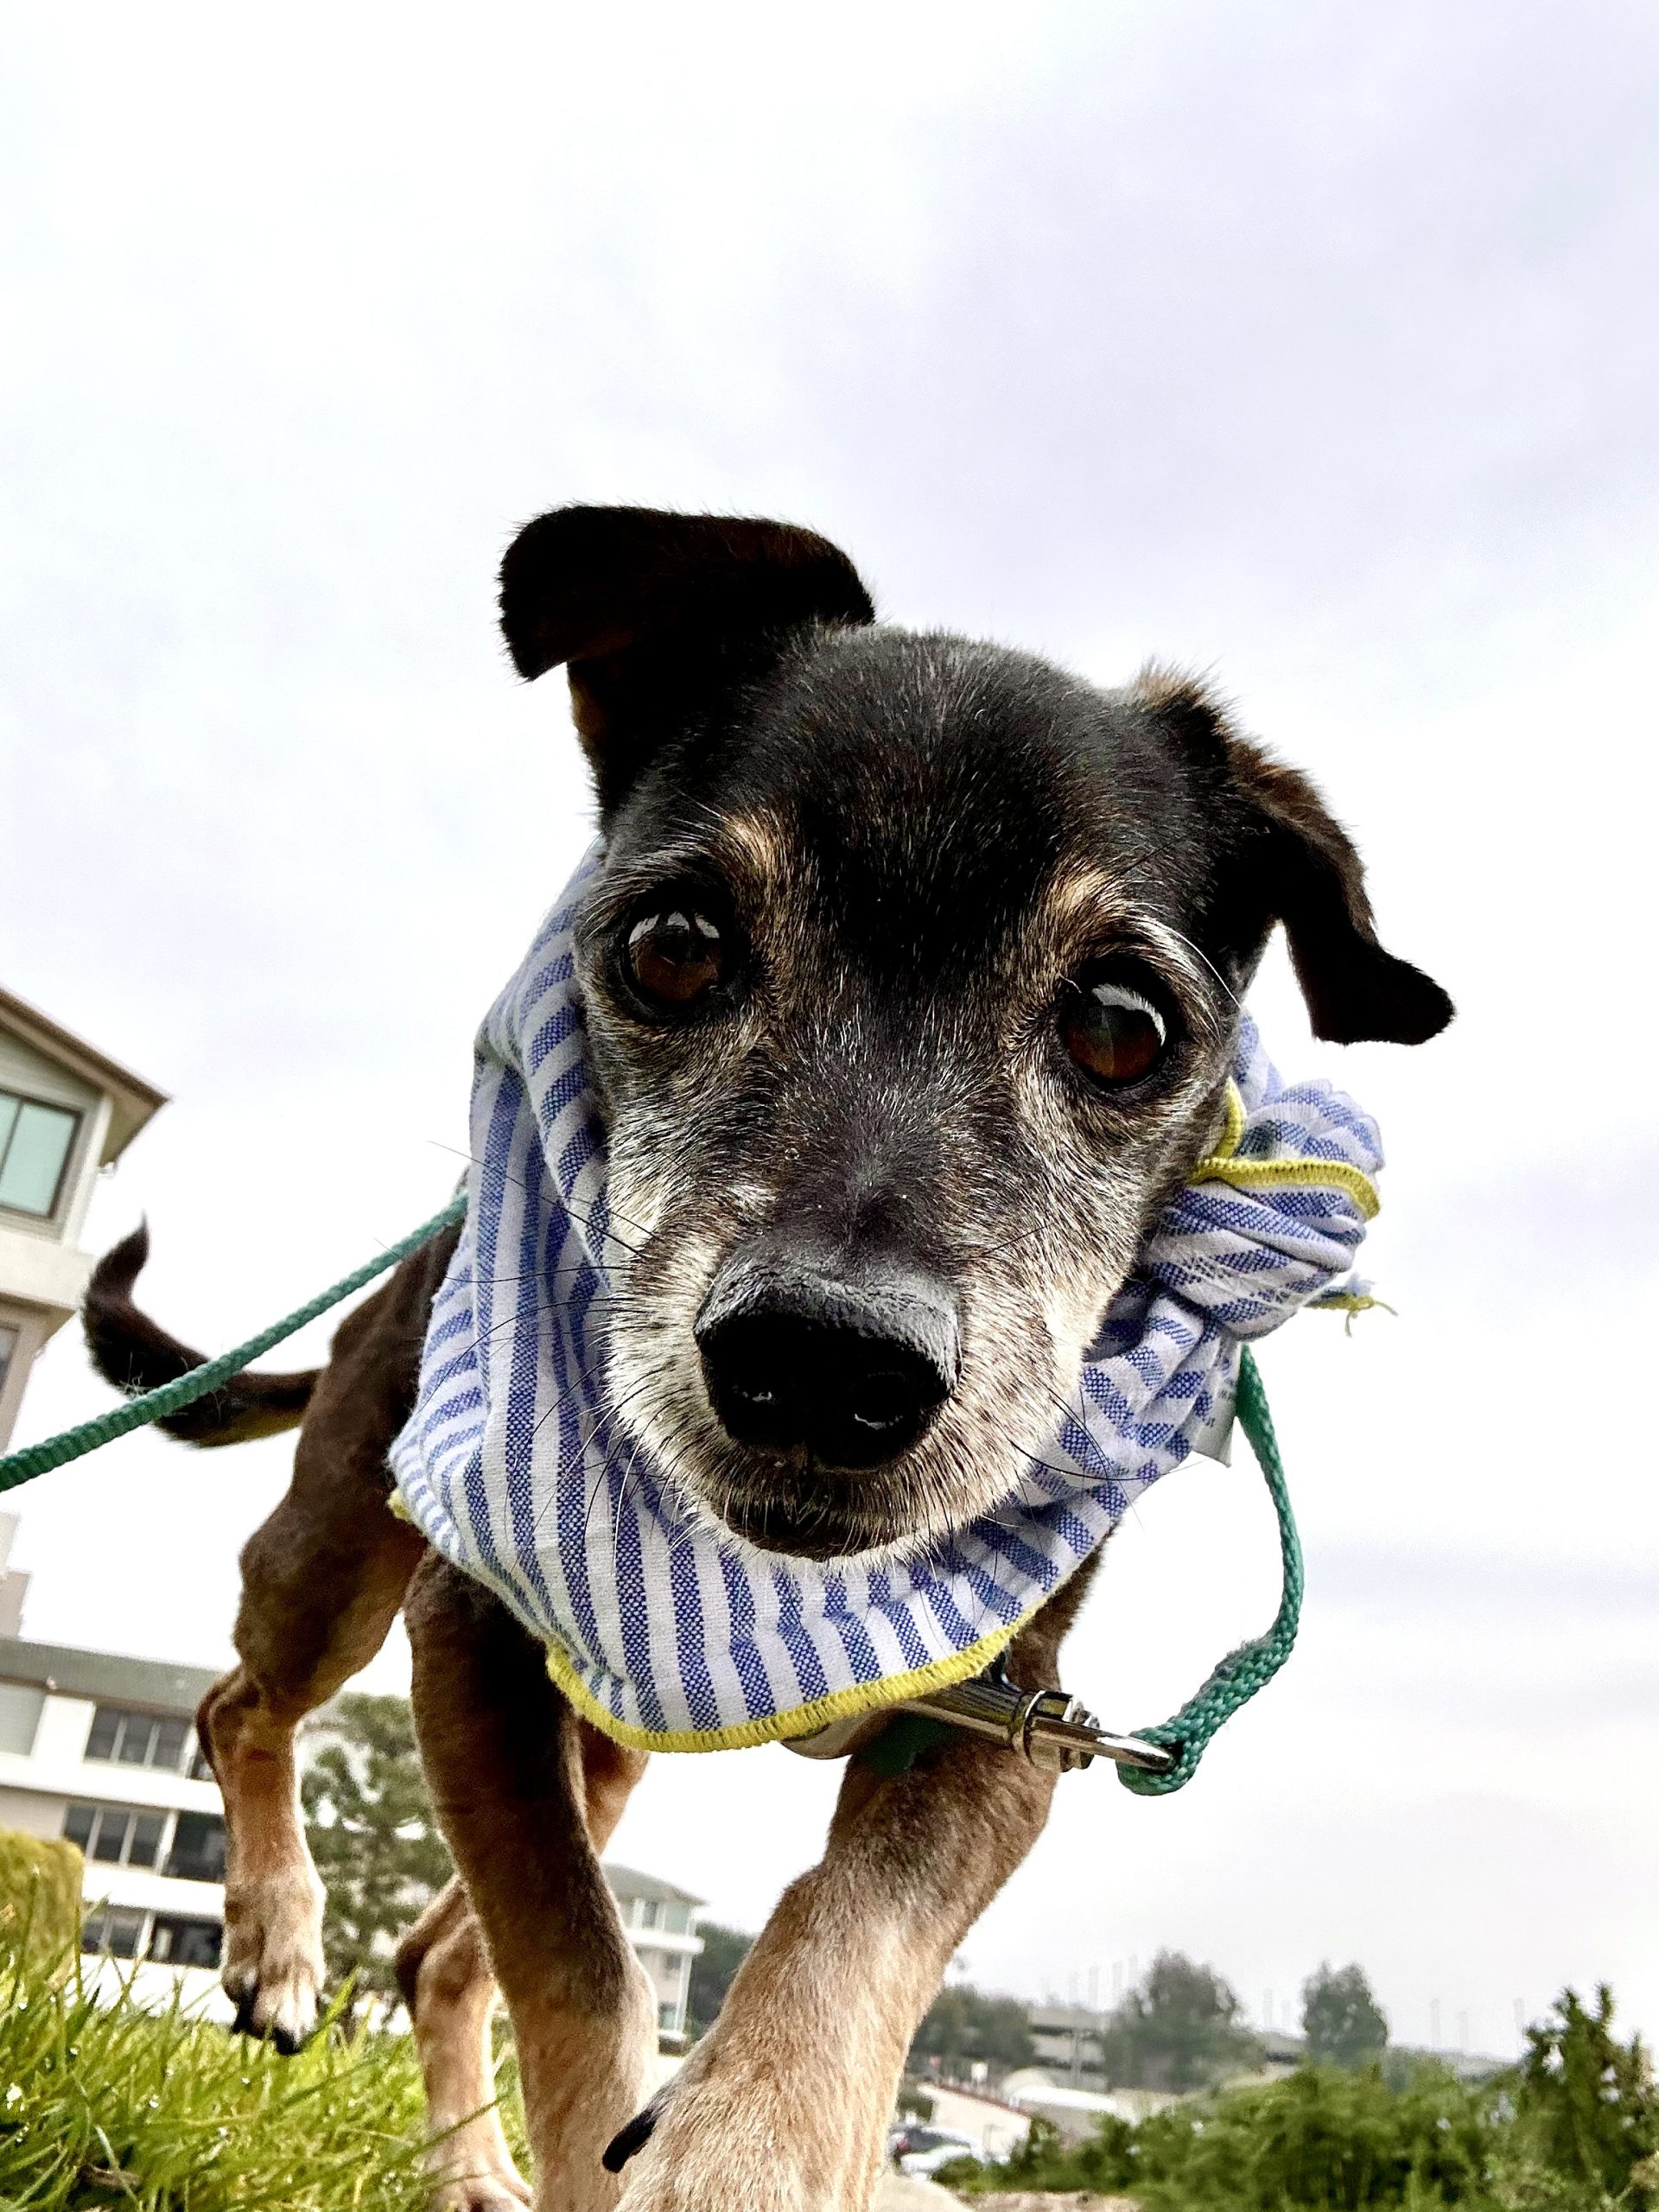 a little senior dog wearing a bandana in the grass outside